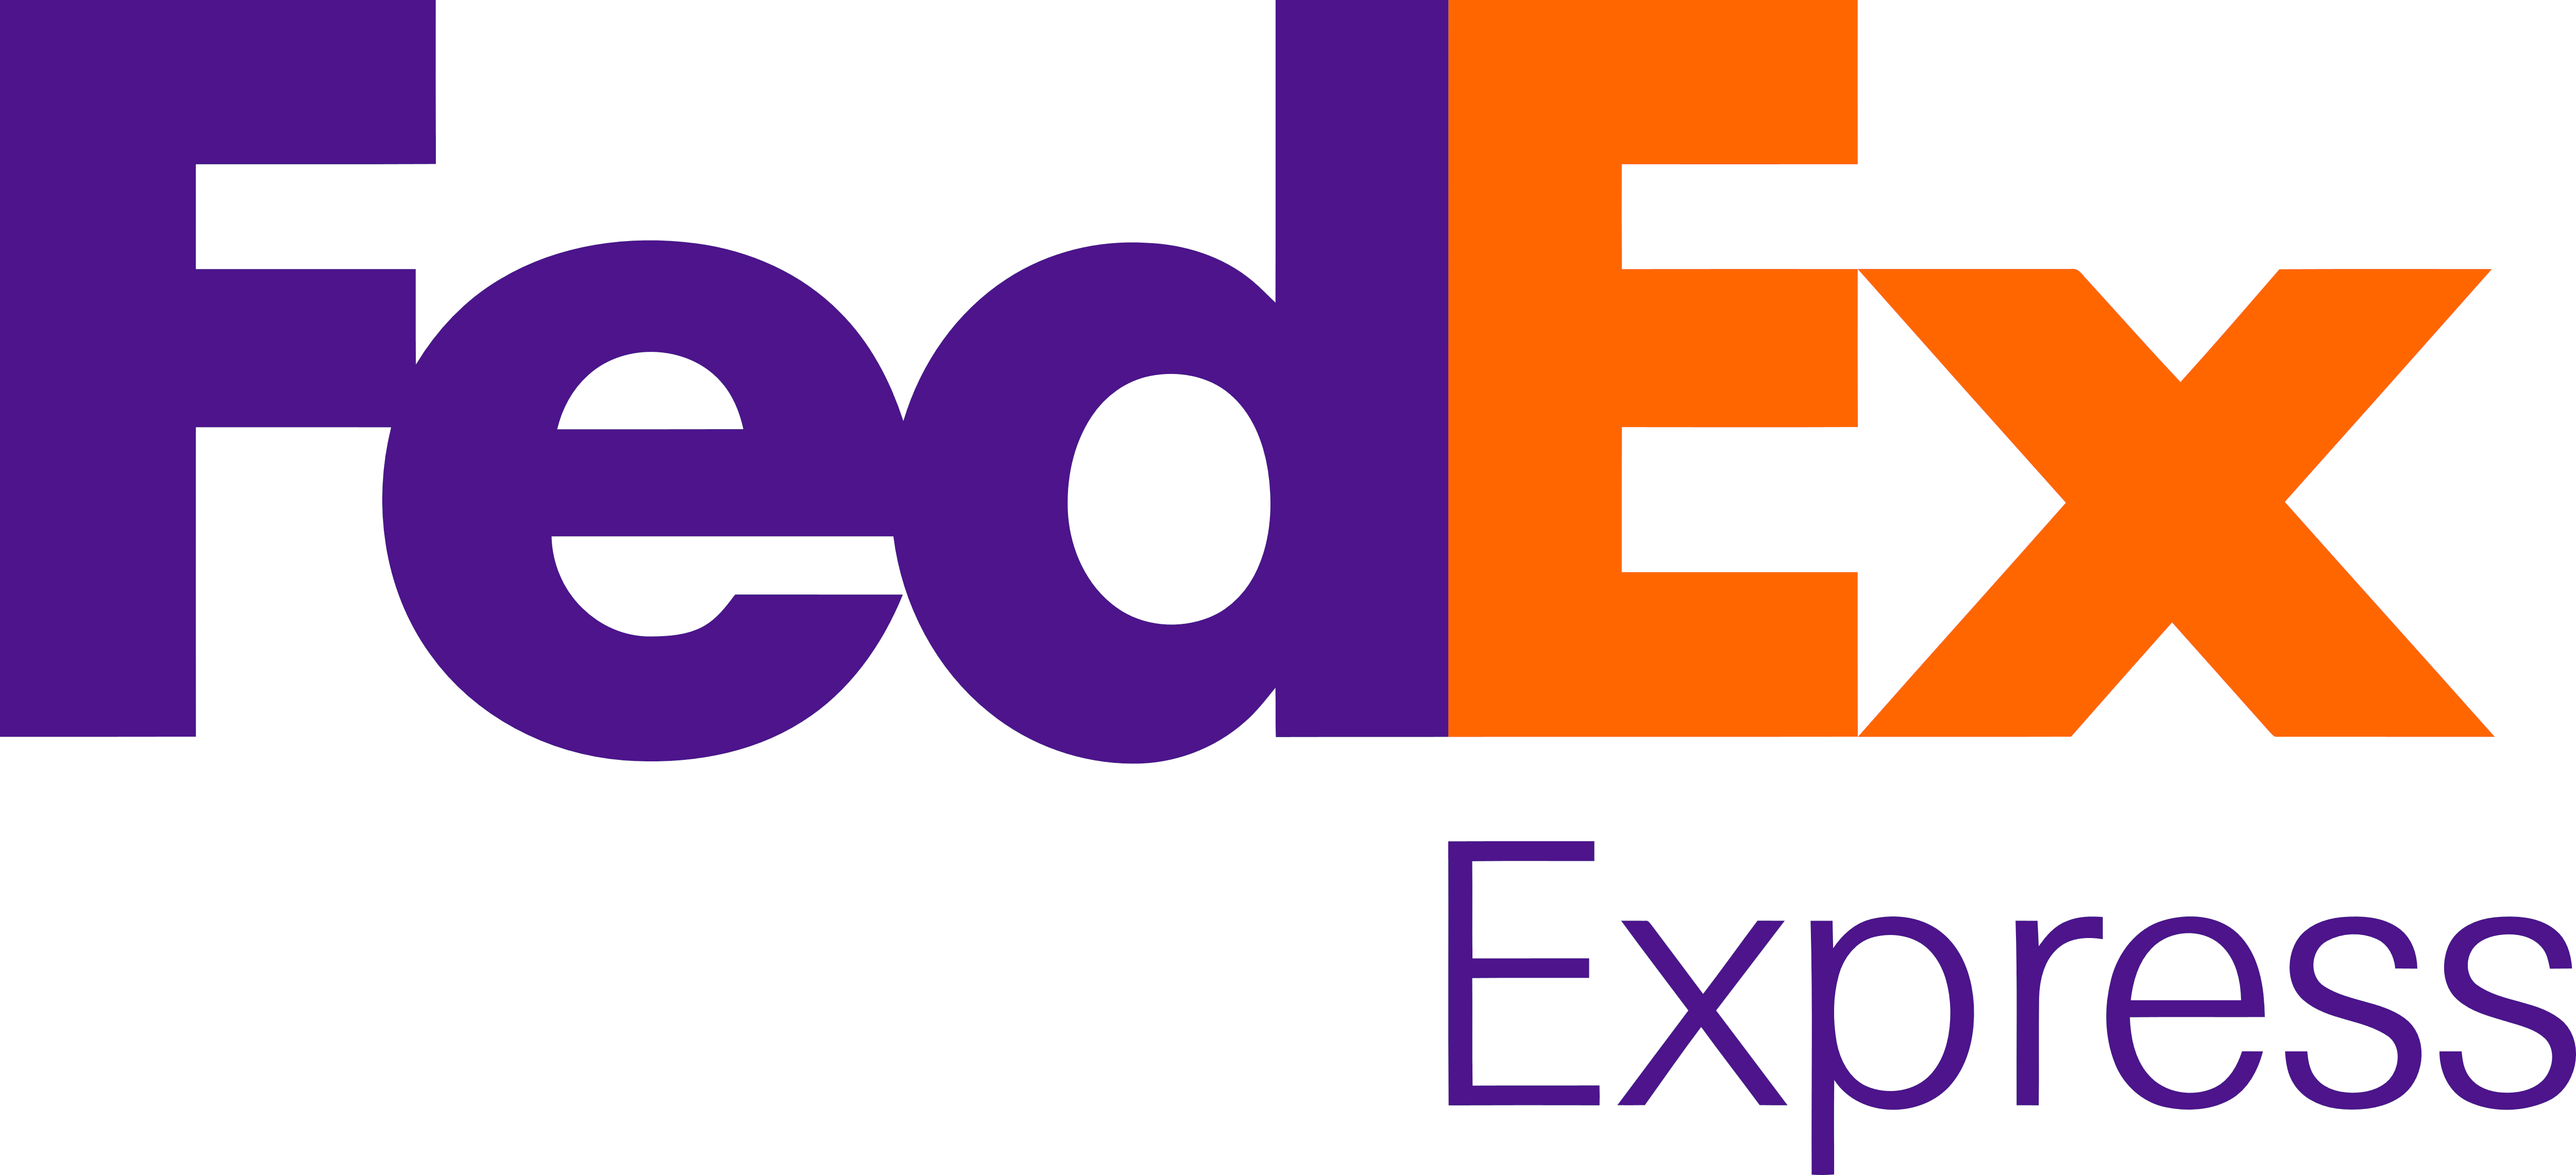 FedEx Ground Express Logo - FedEx – Logos Download